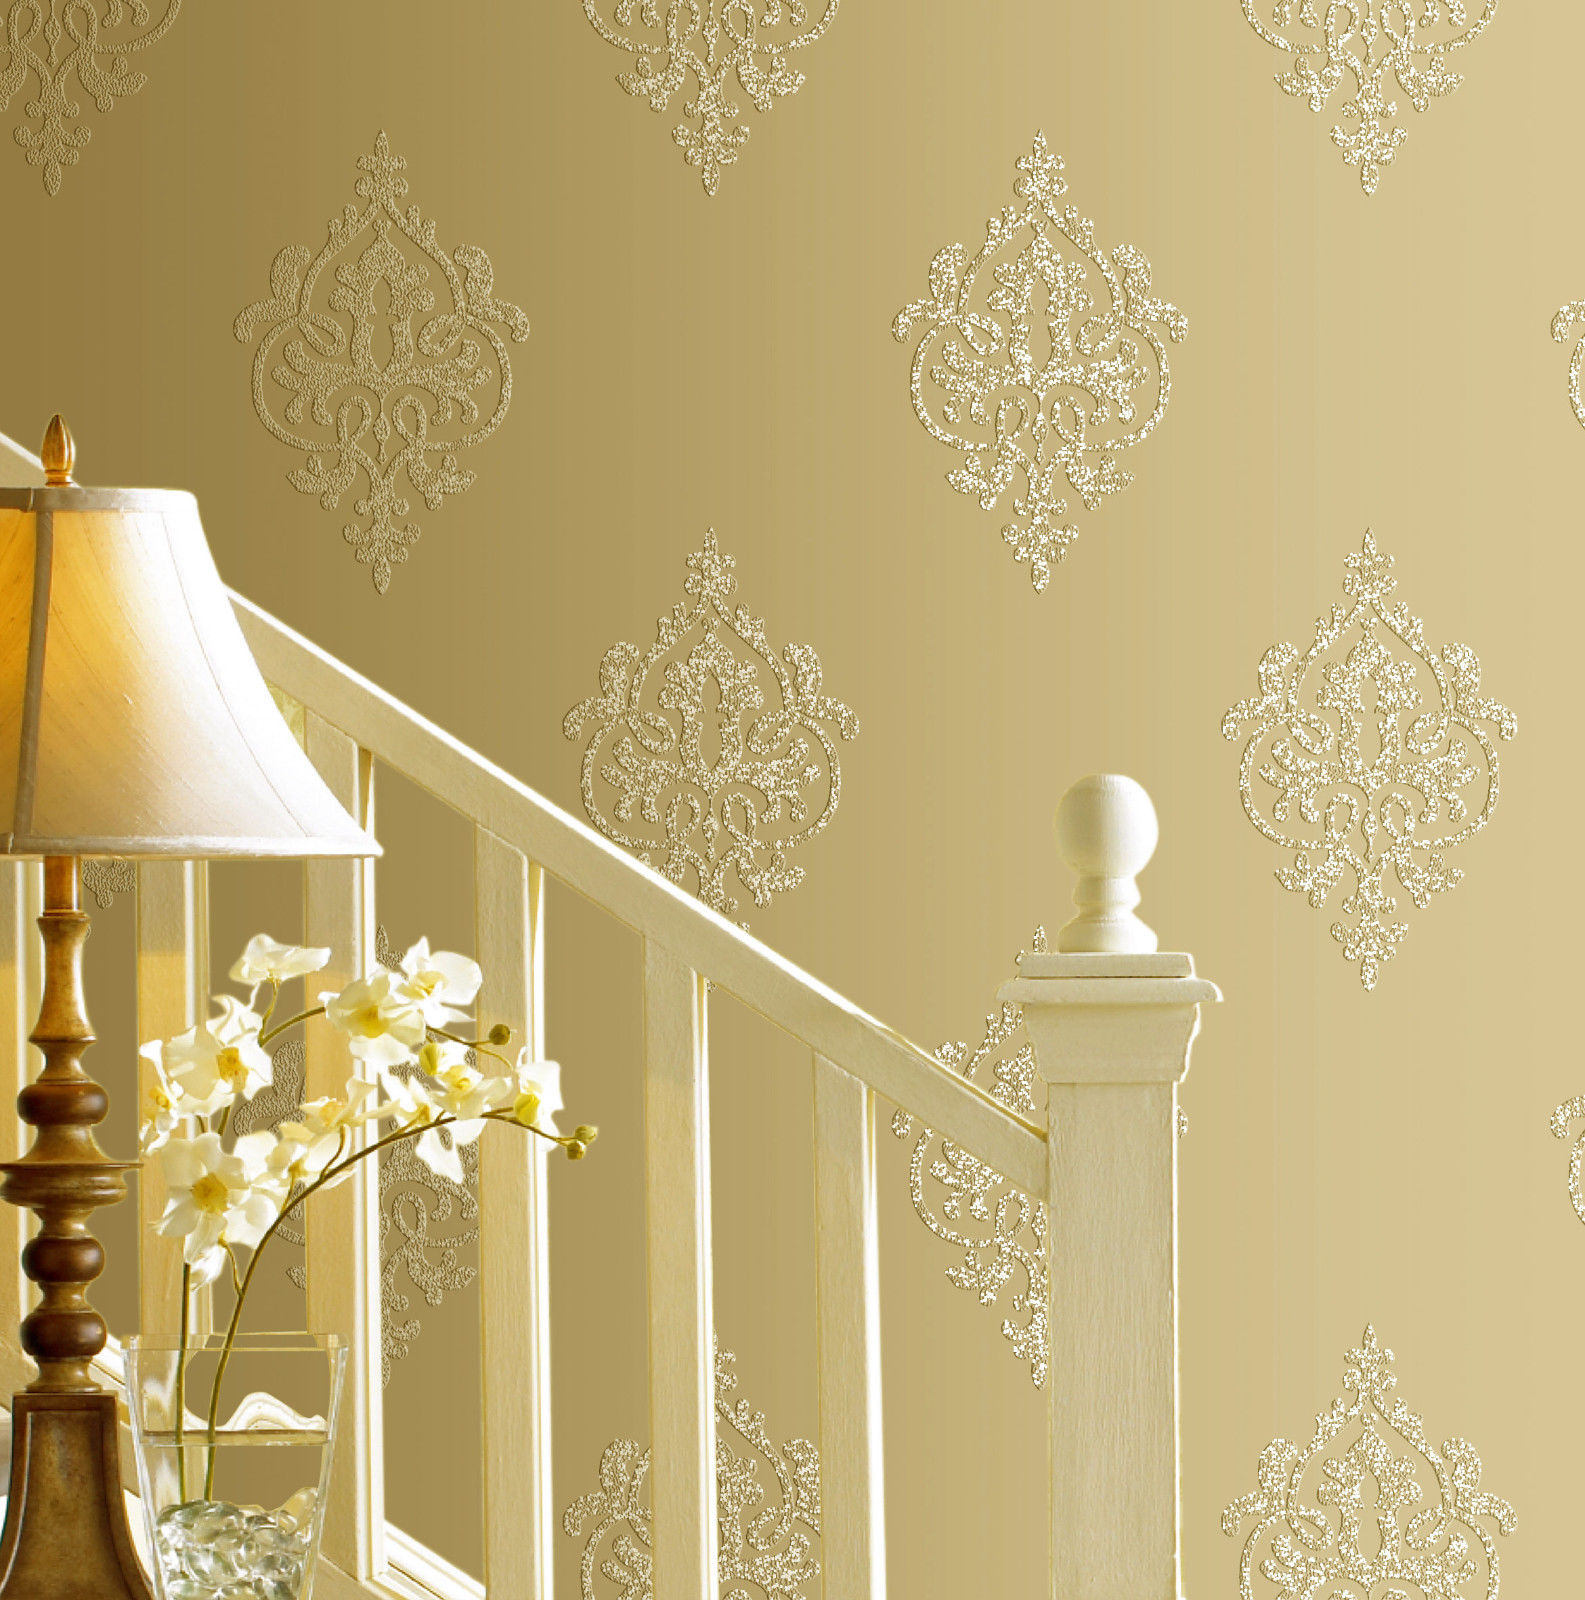 Luxury Vintage Shining Damask Embossed Textured Wallpaper Bedroom